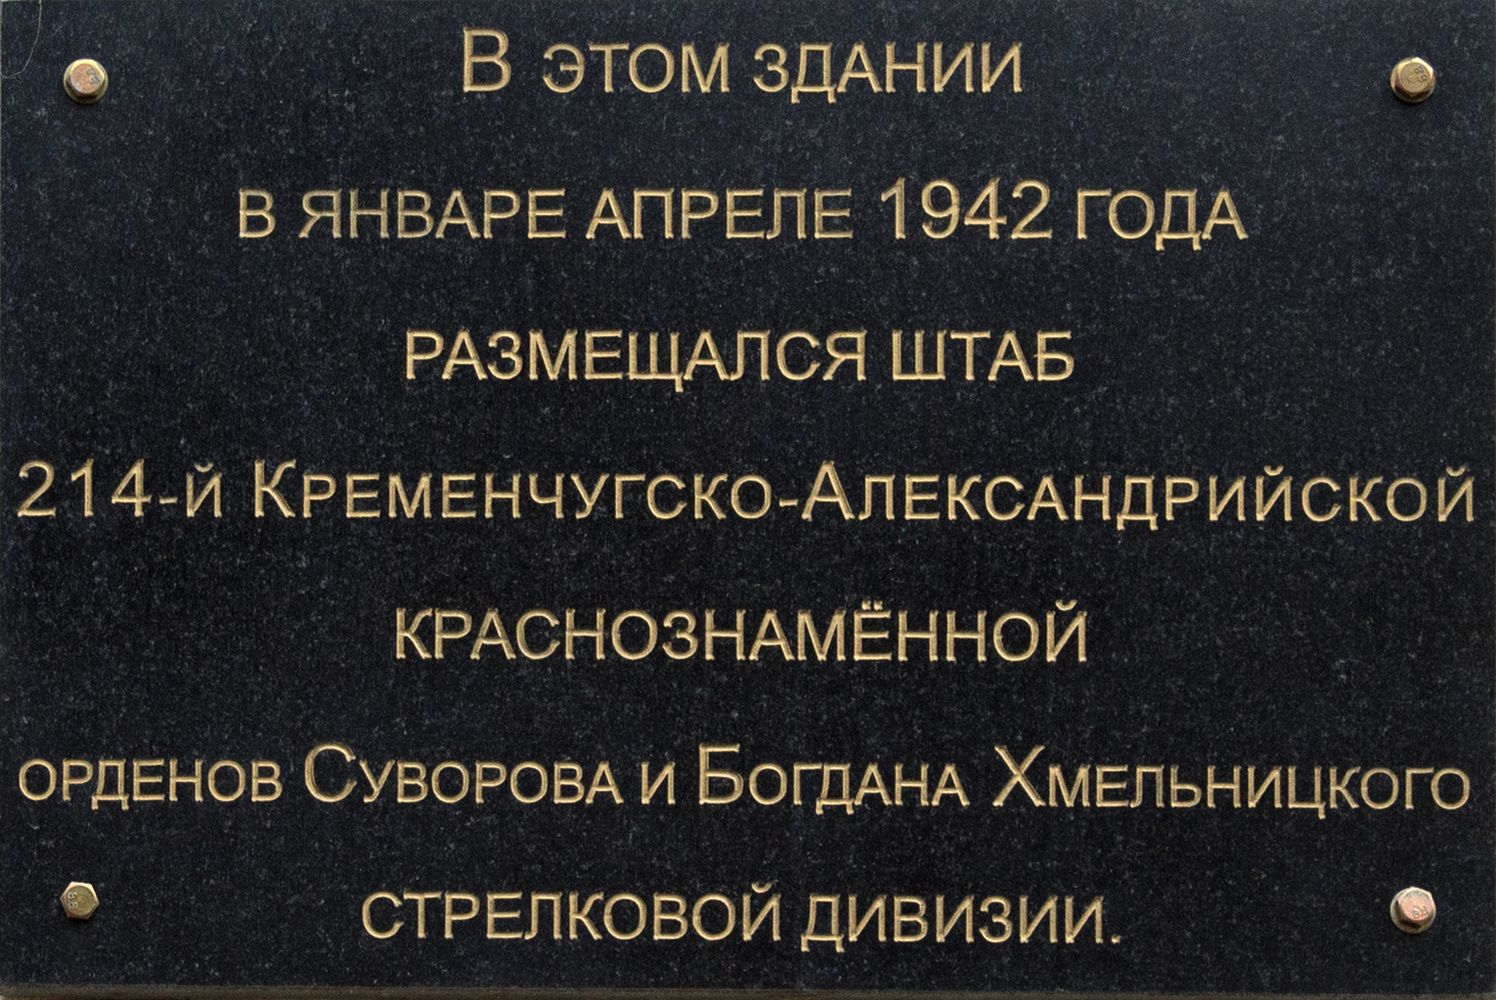 Ufa, Улица Октябрьской Революции, 7. Ufa — Memorial plaques